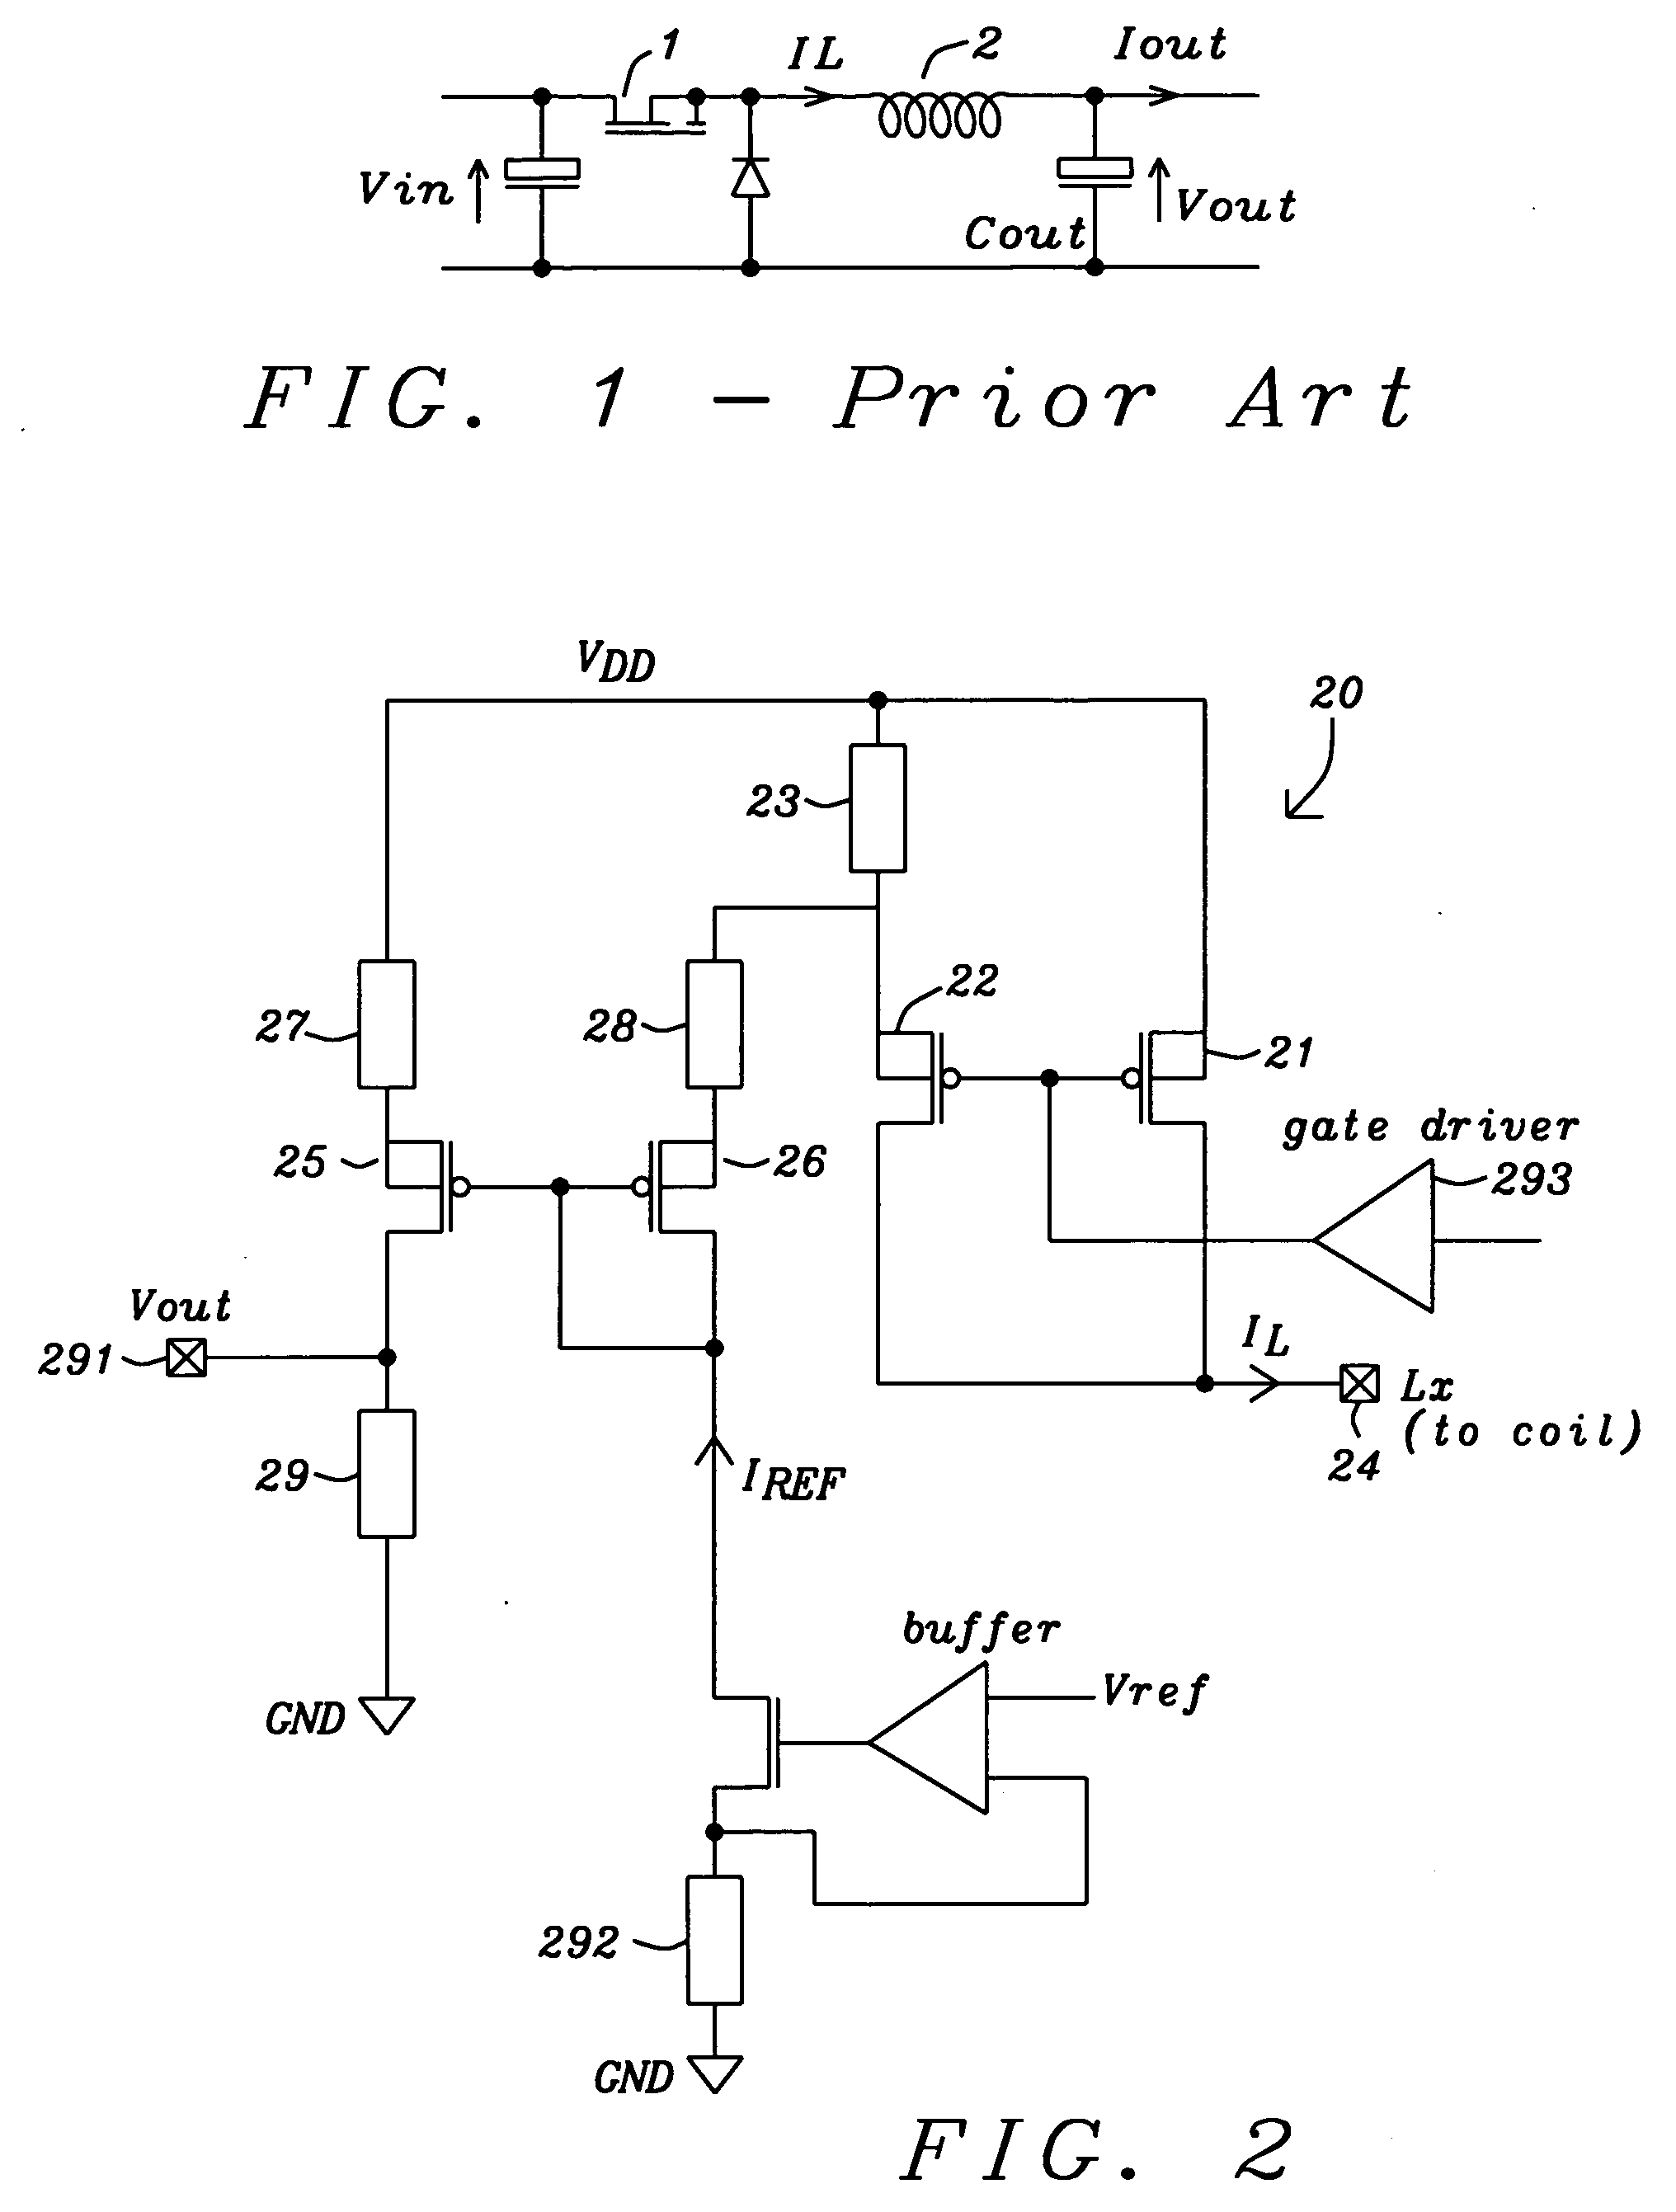 Current sensing circuit for DC/DC buck converters